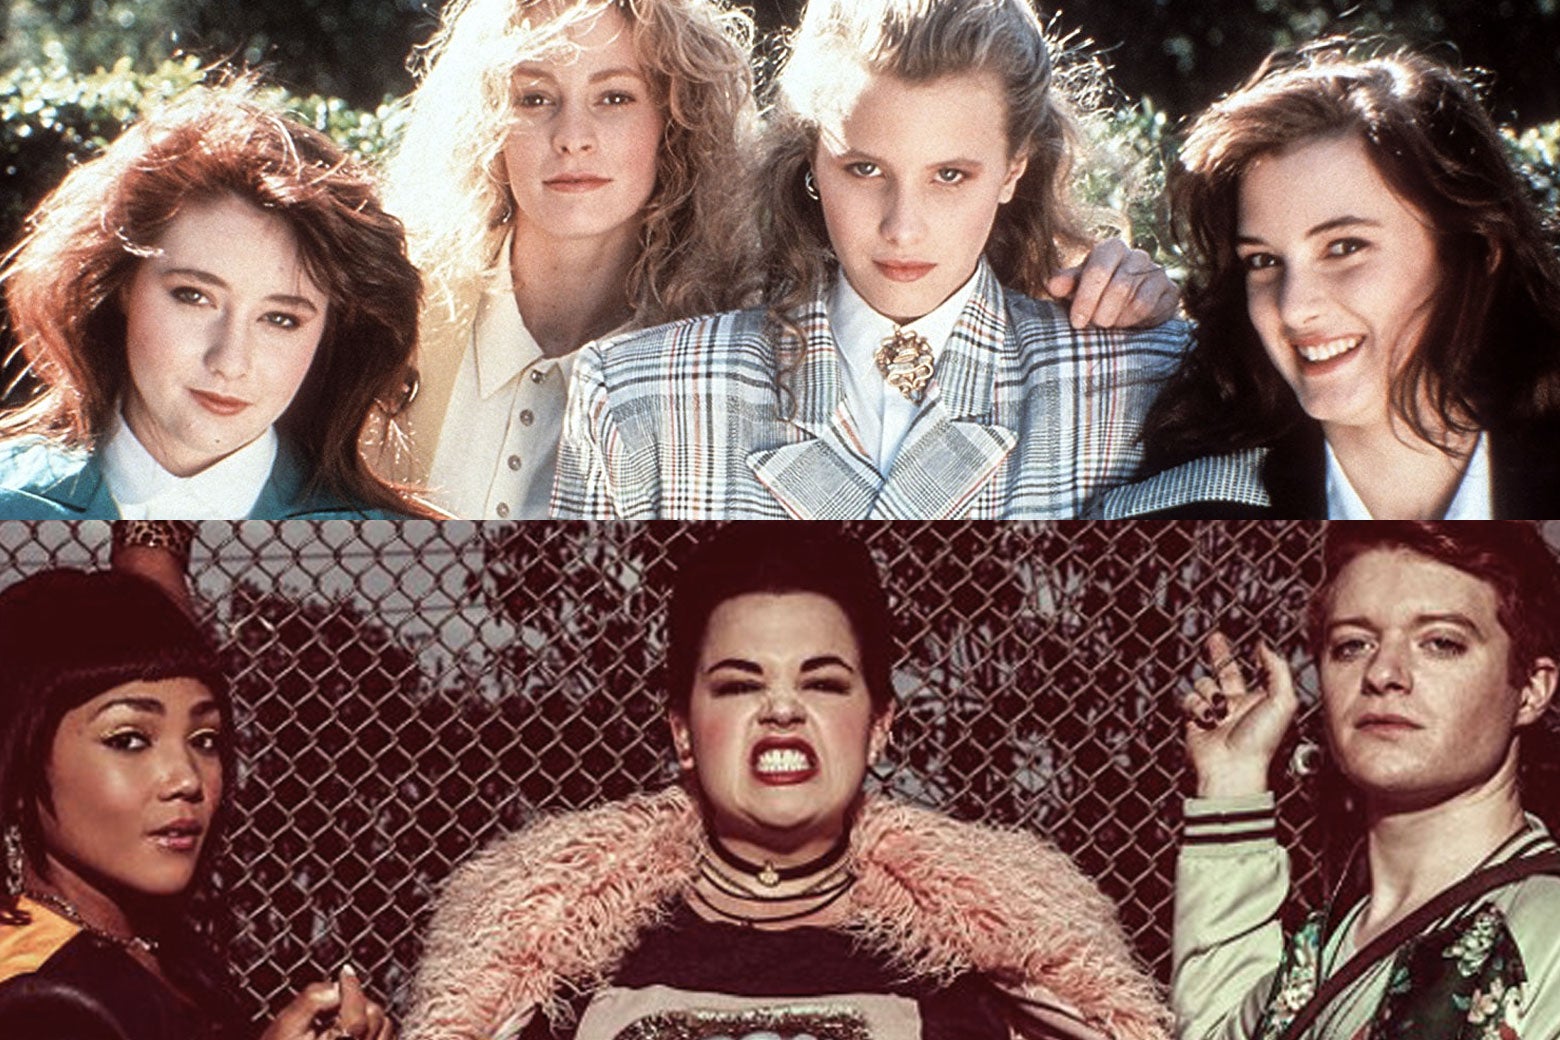 Top: The original Heathers. Bottom: The new Heathers.